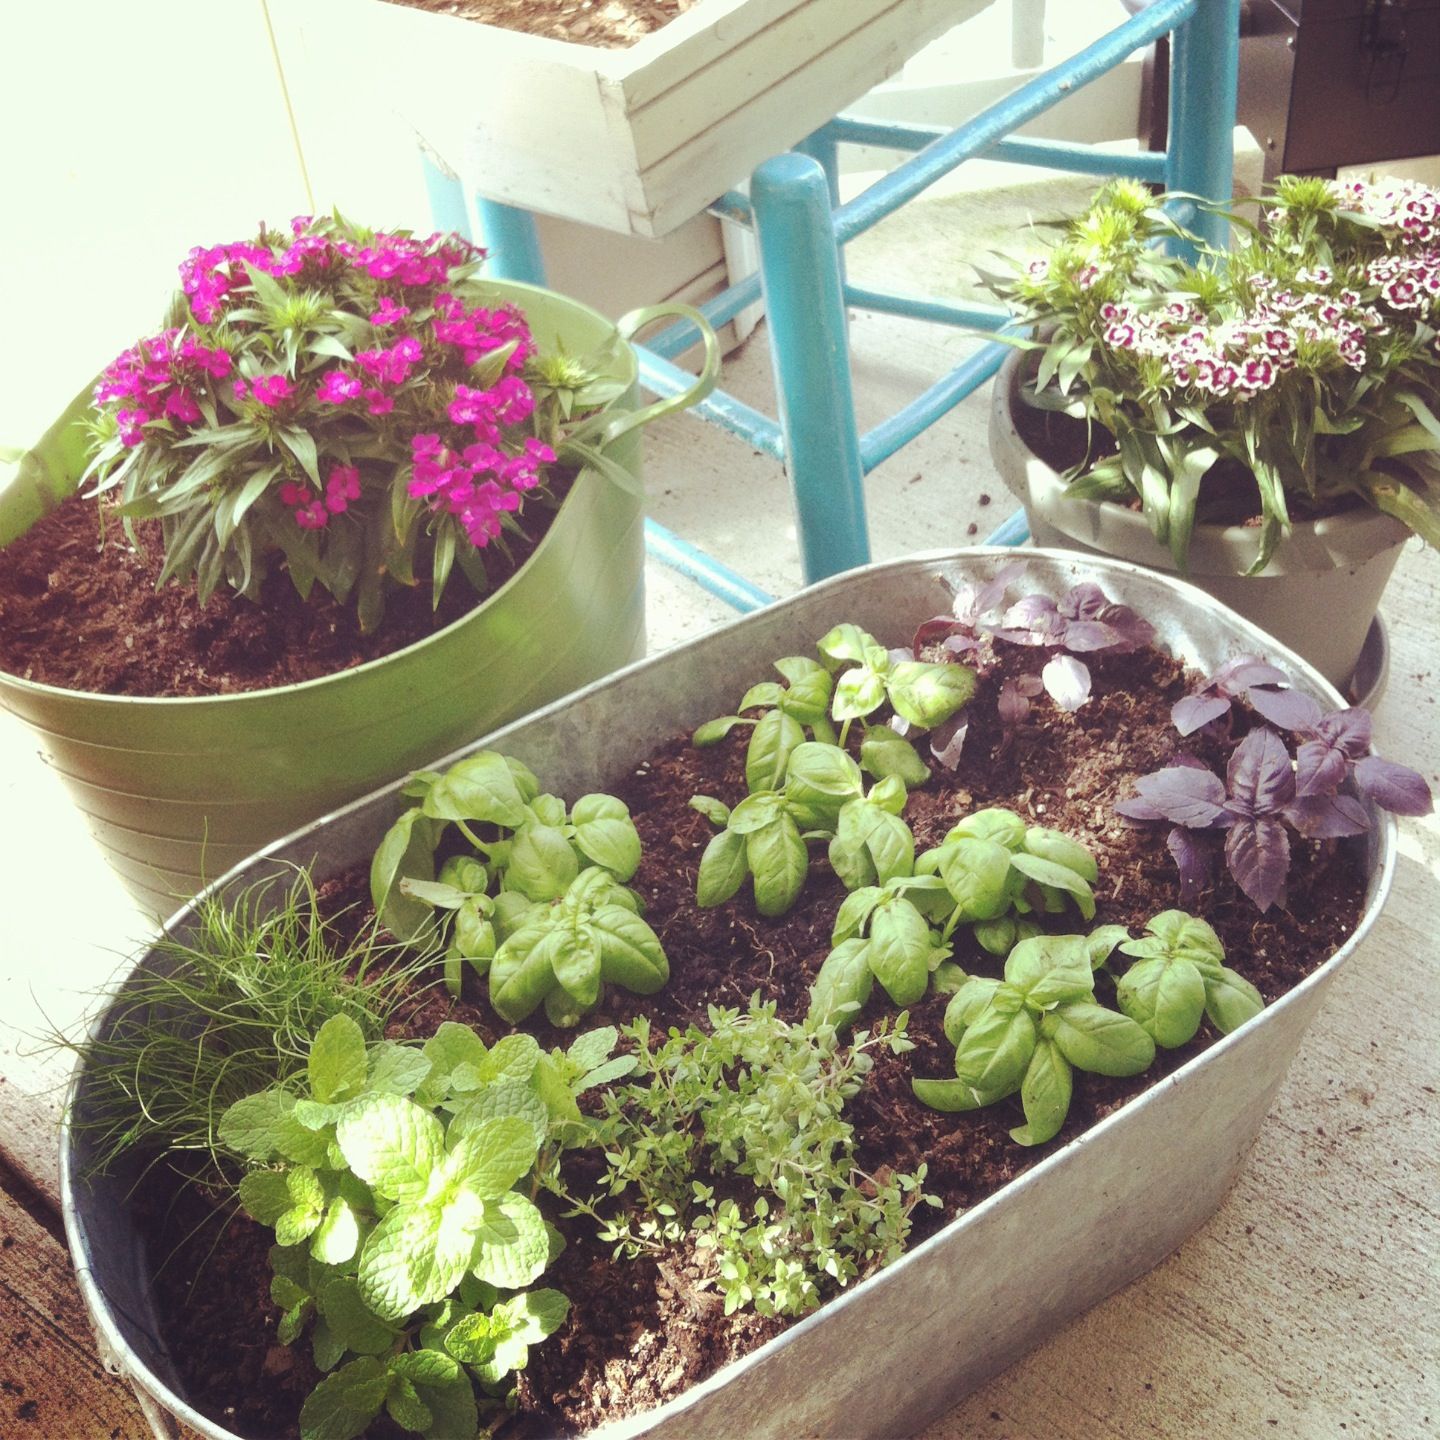 Fun And Easy Indoor Herb Garden Ideas